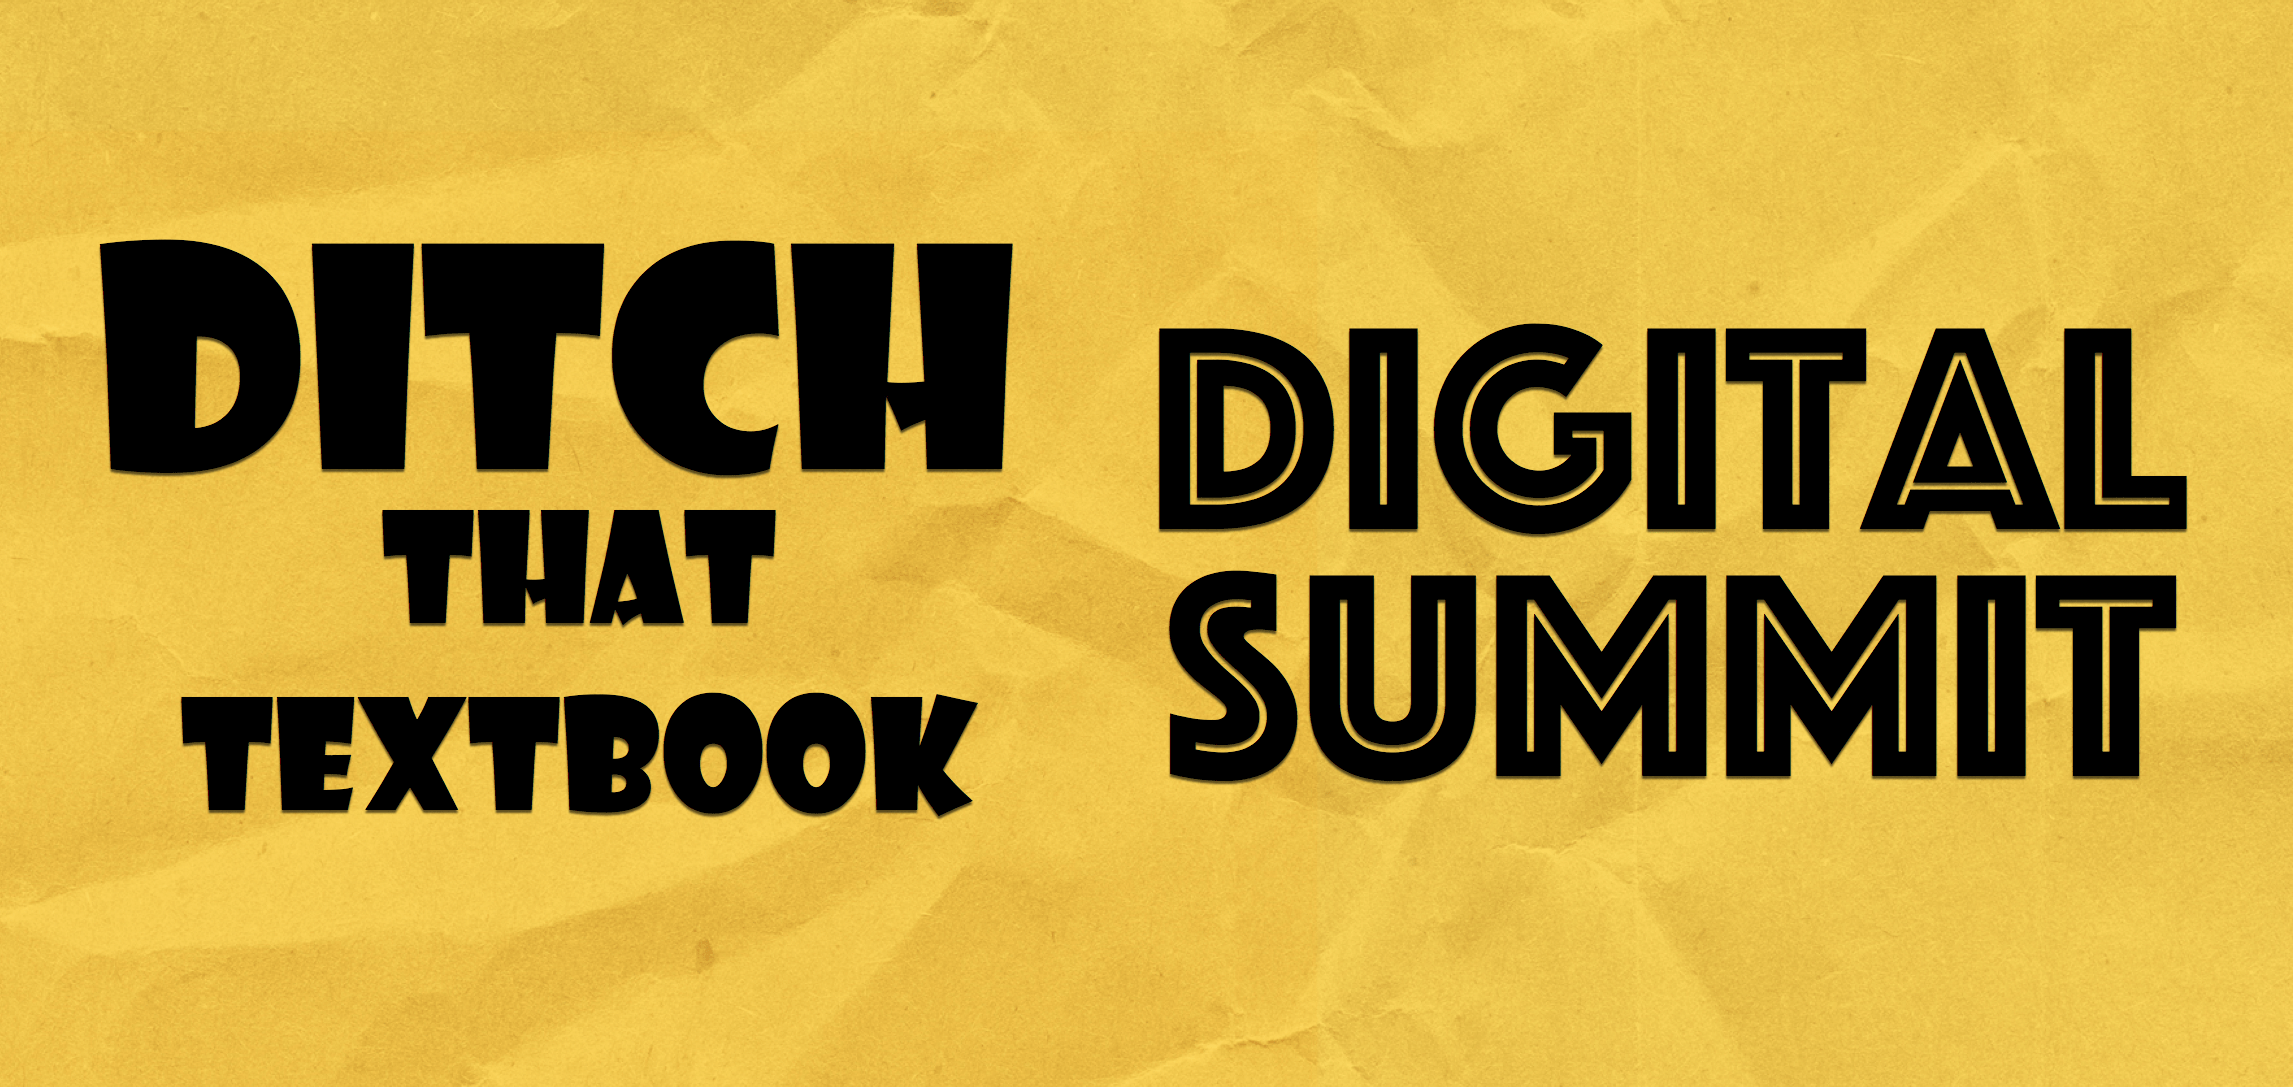 Ditch That Textbook Digital Summit